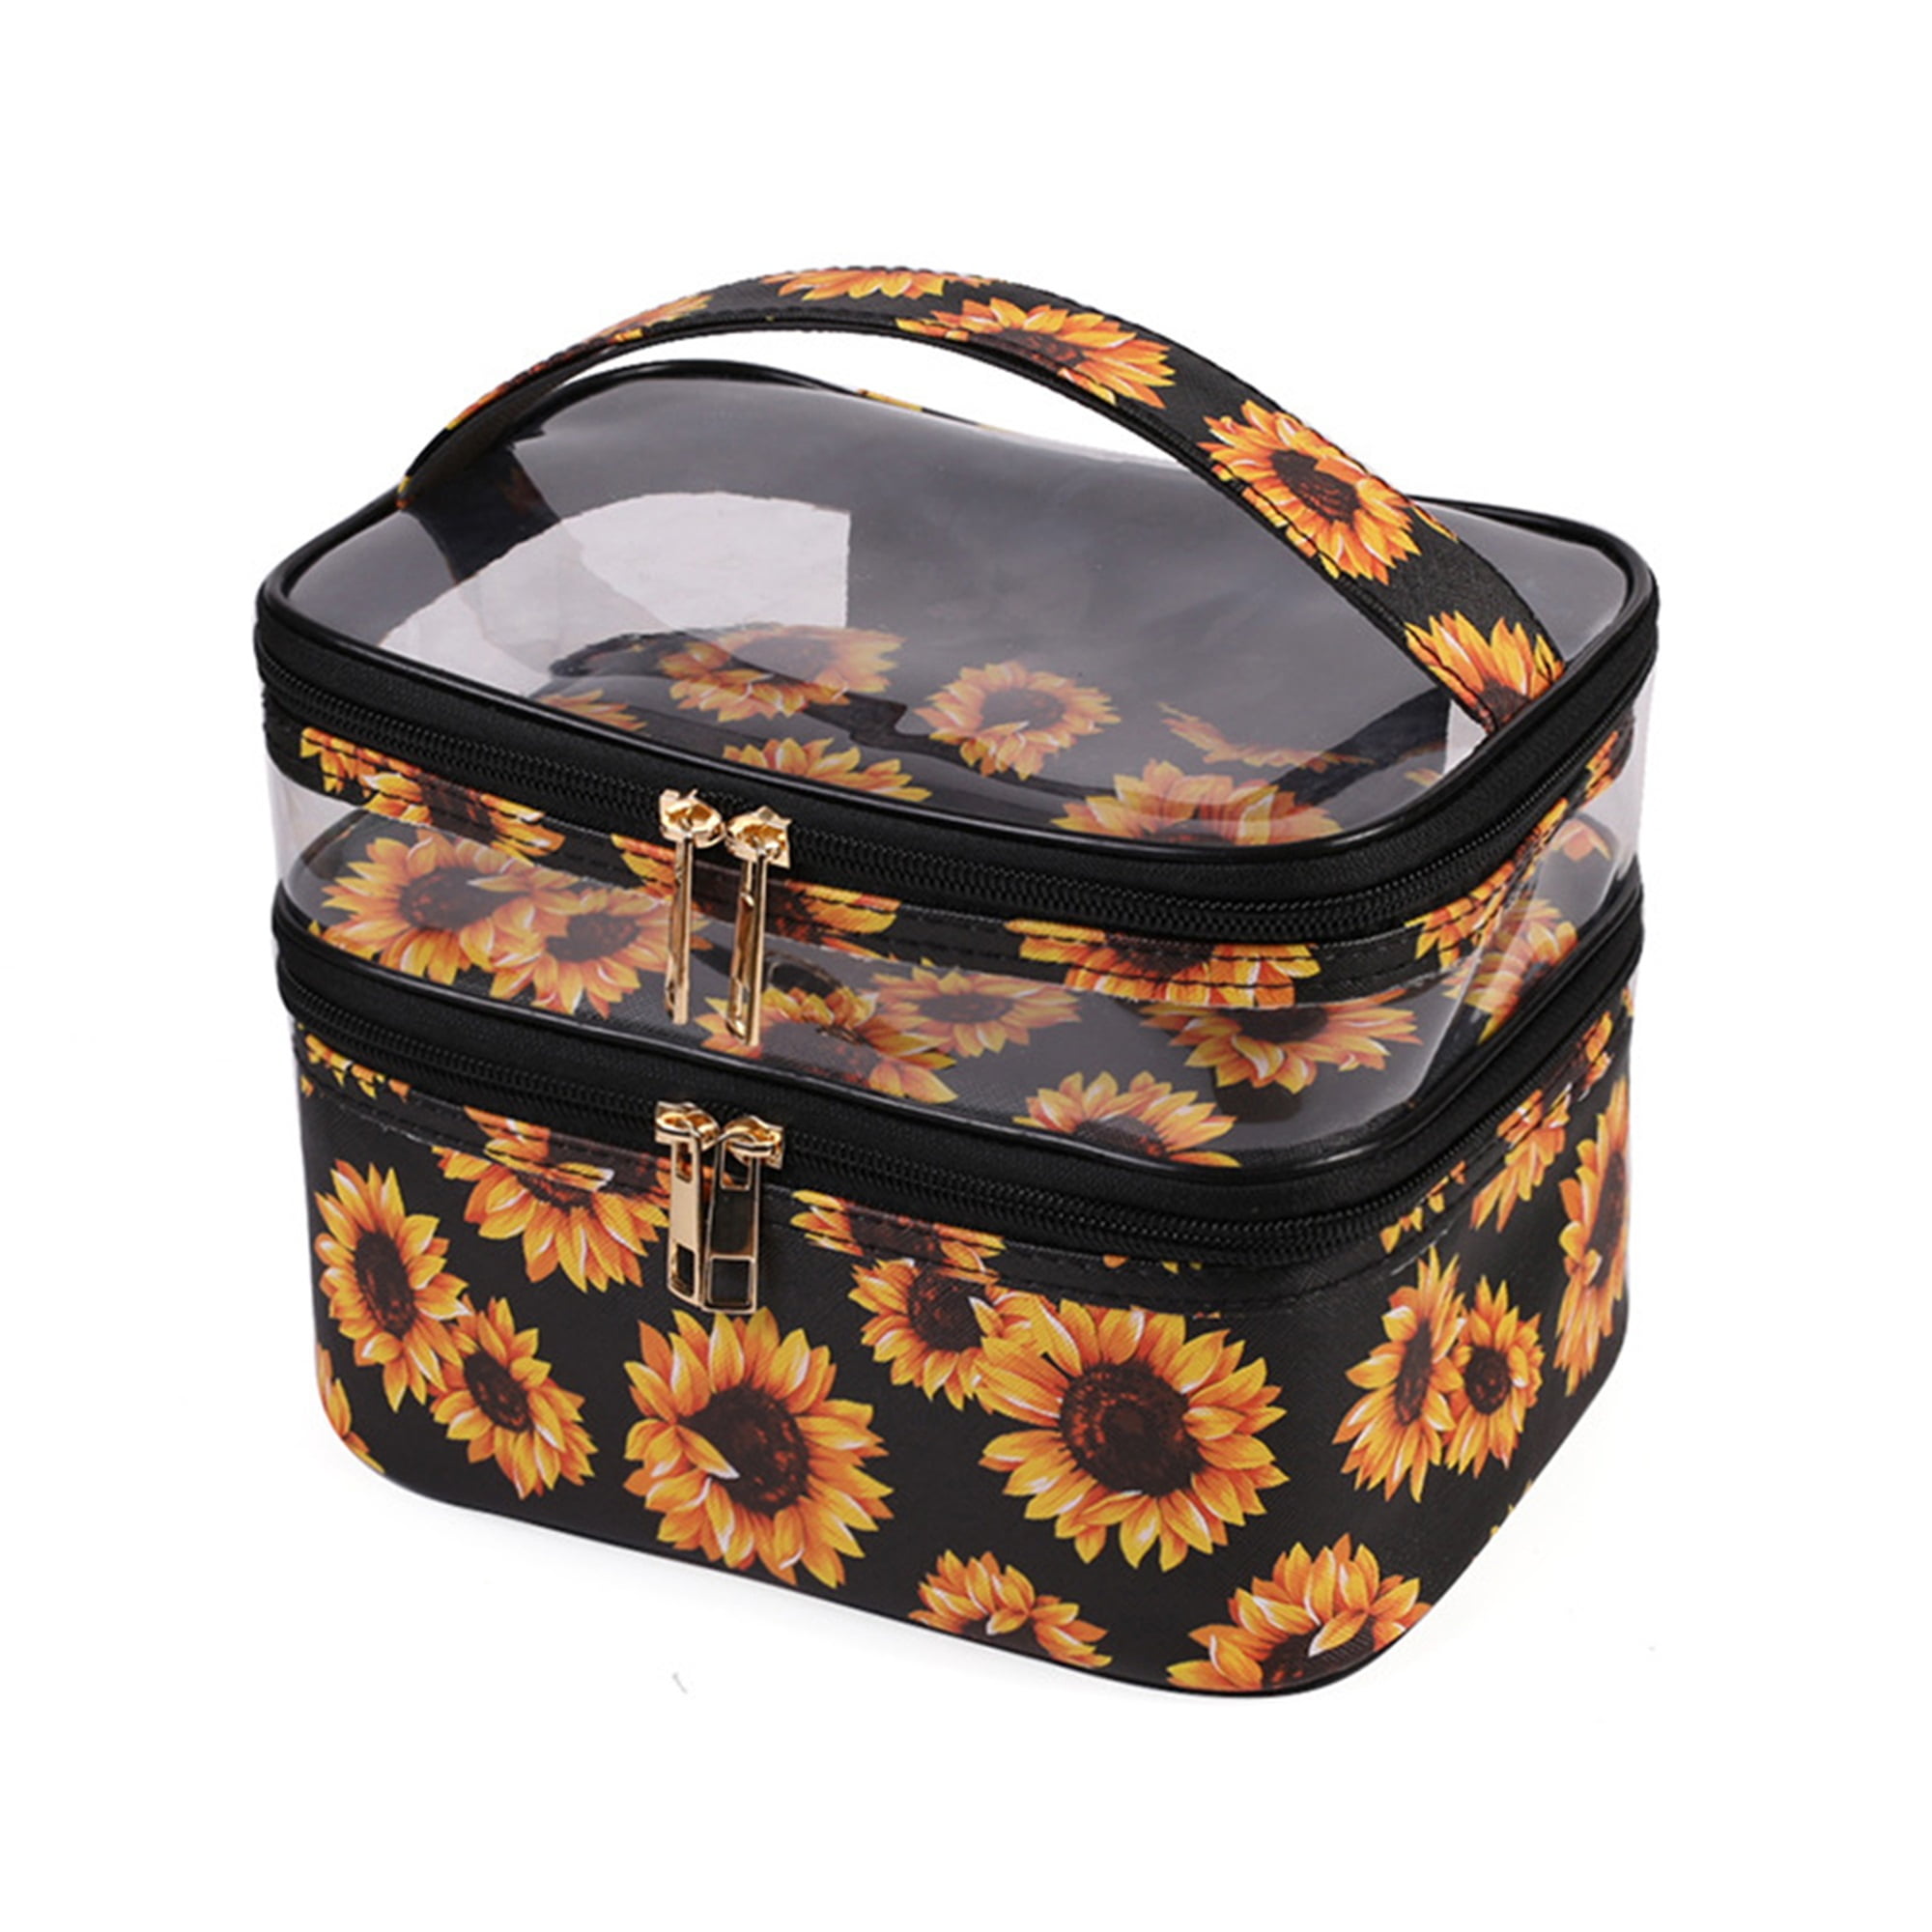 Sunisery Large Travel Makeup Bag Organizer, Double Layer Train Case ...